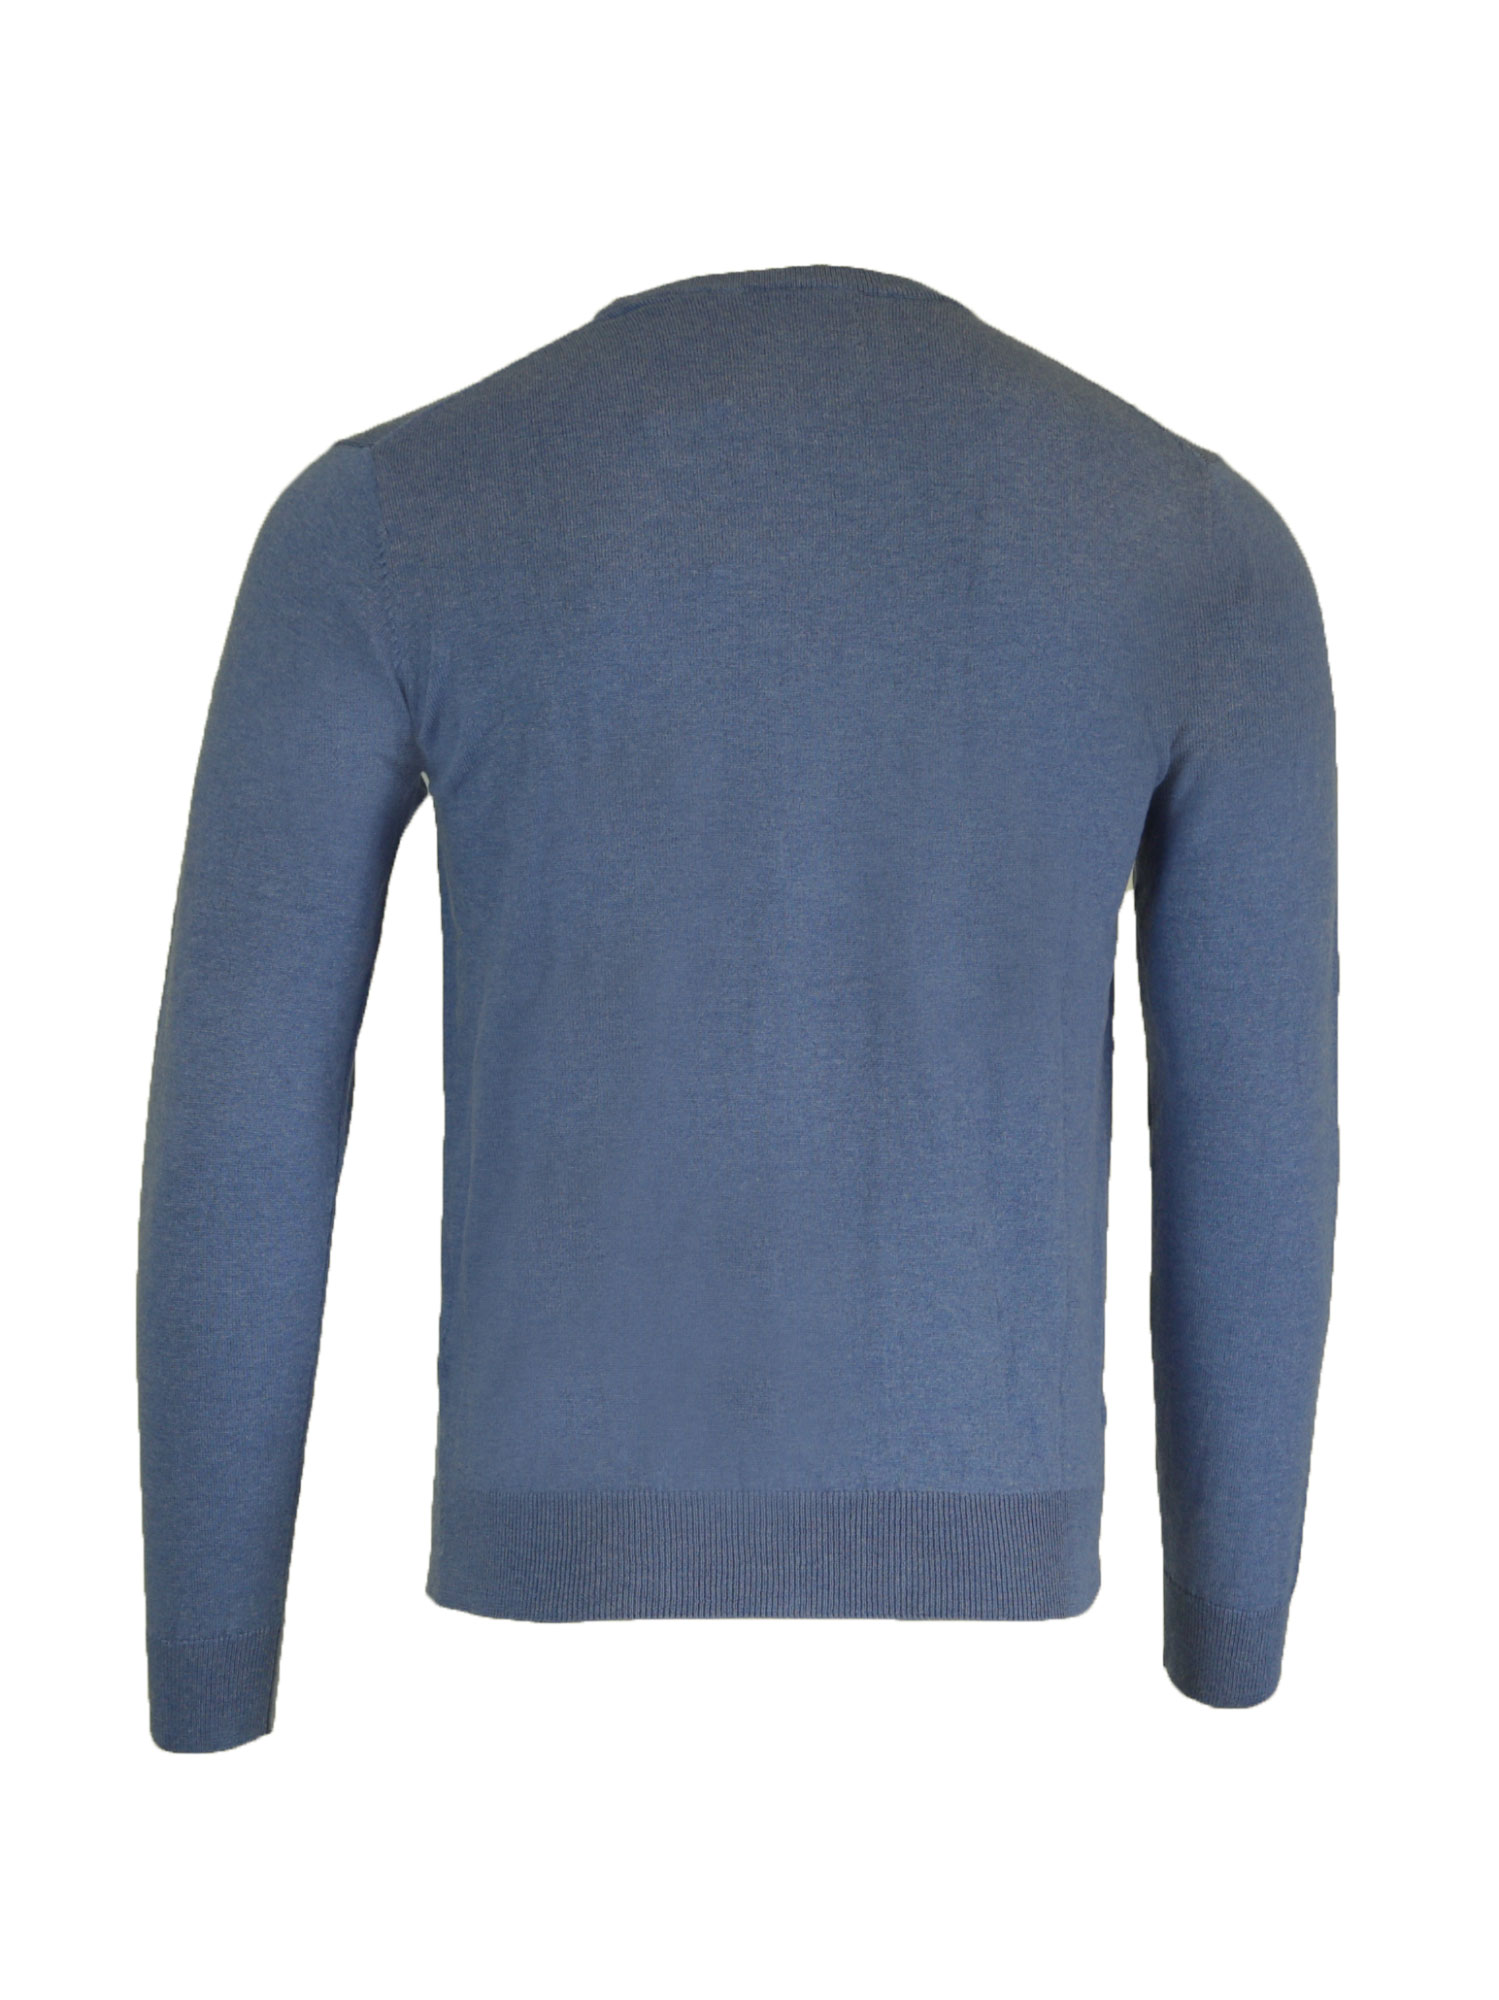 GANT Men's Cotton Wool Crew Neck Sweater 83101 Size Medium $130 NWT | eBay